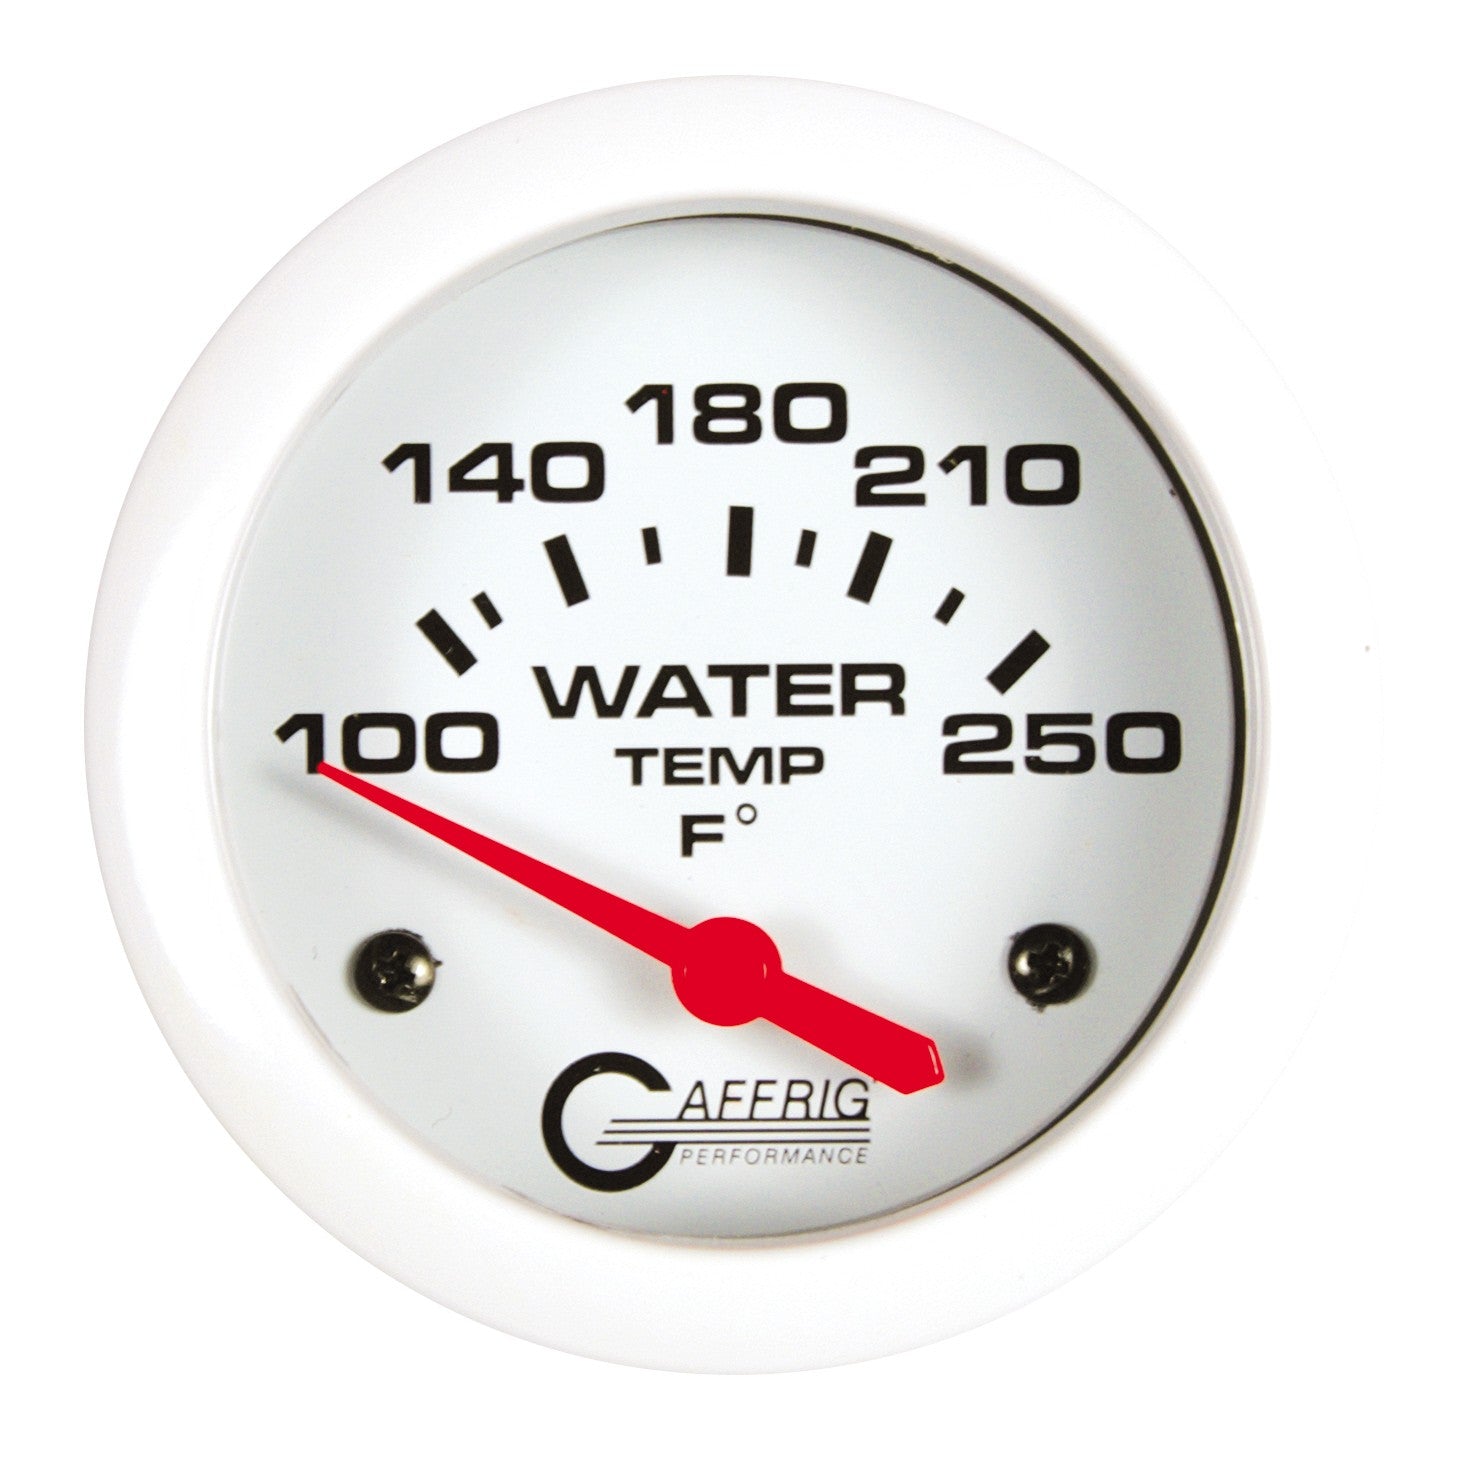 GAFFRIG PART #13006 2 5/8 INCH ELECTRIC WATER TEMP 100-250 F - W/SENDER & BUSHING KIT WHITE